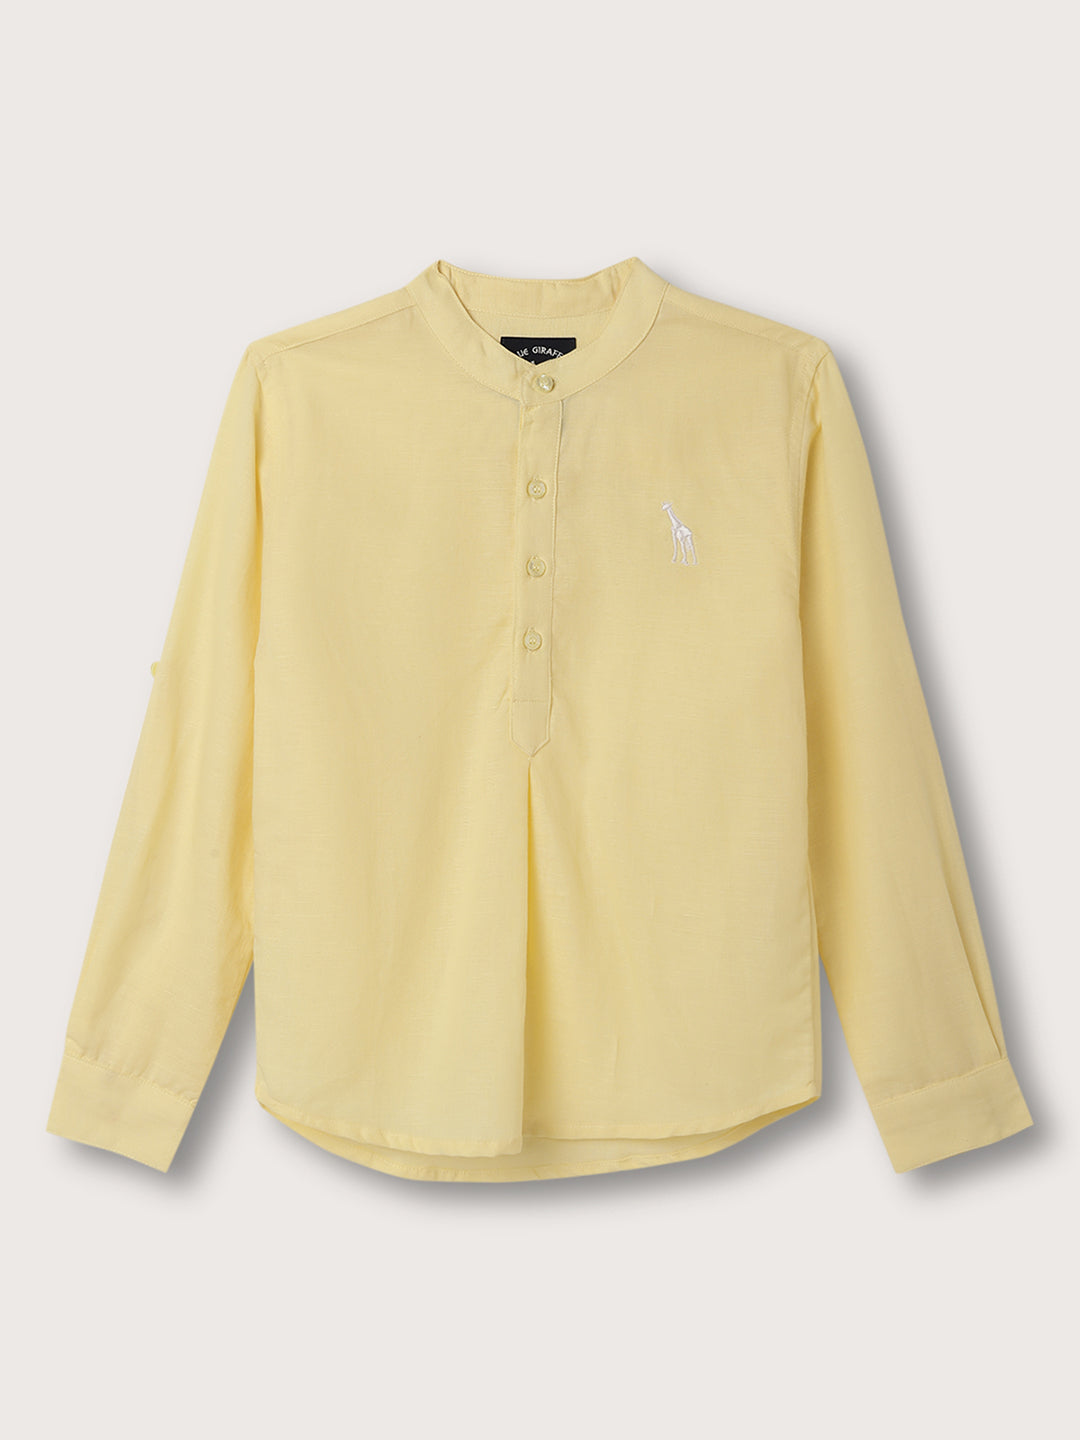 Blue Giraffe Boys Yellow Solid Mandarin Collar Shirt